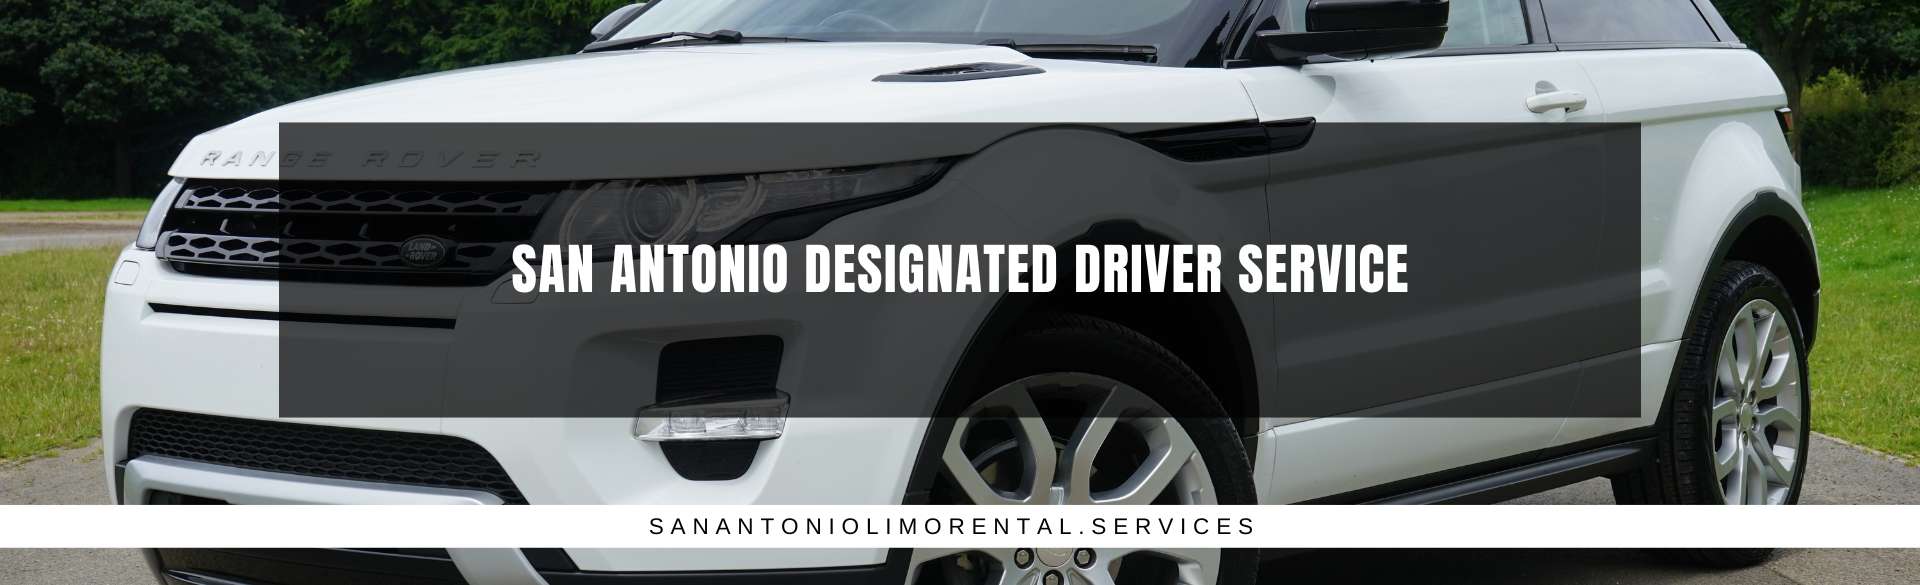 San Antonio Designated Driver Service